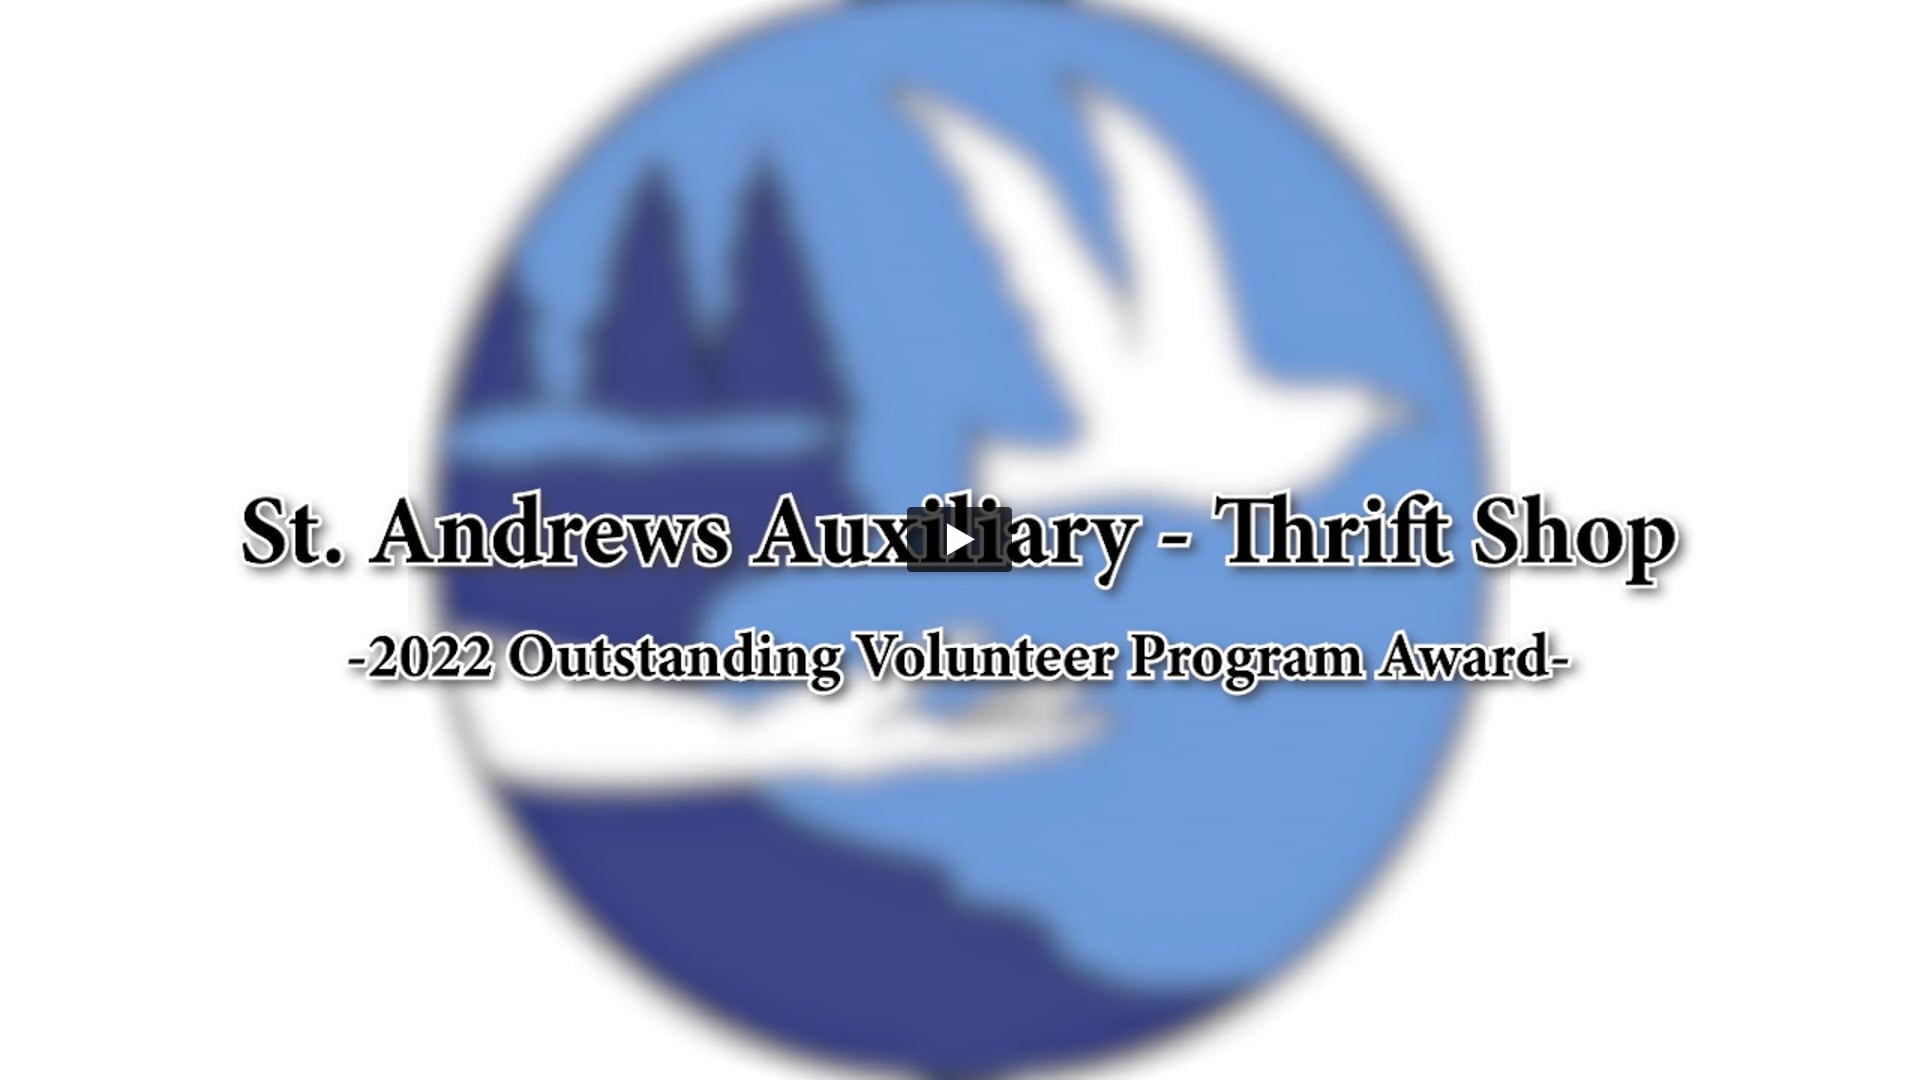 St. Andrews Auxiliary - Thrift Shop 2022 Outstanding Volunteer Program Award